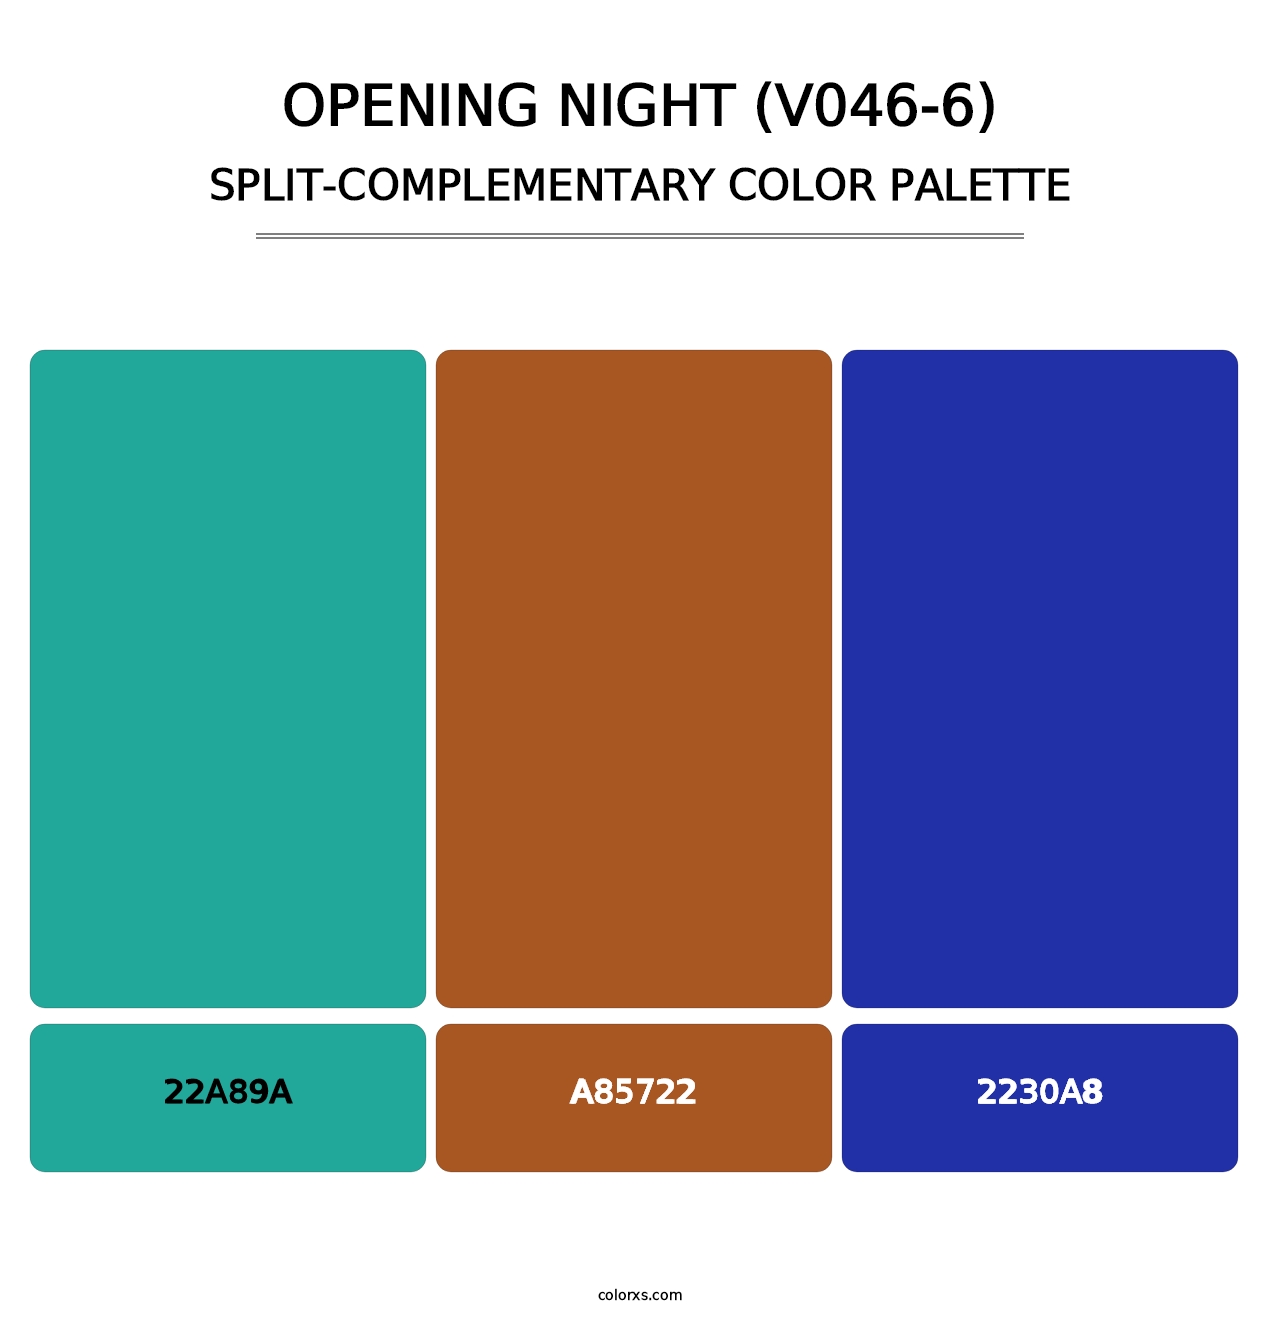 Opening Night (V046-6) - Split-Complementary Color Palette